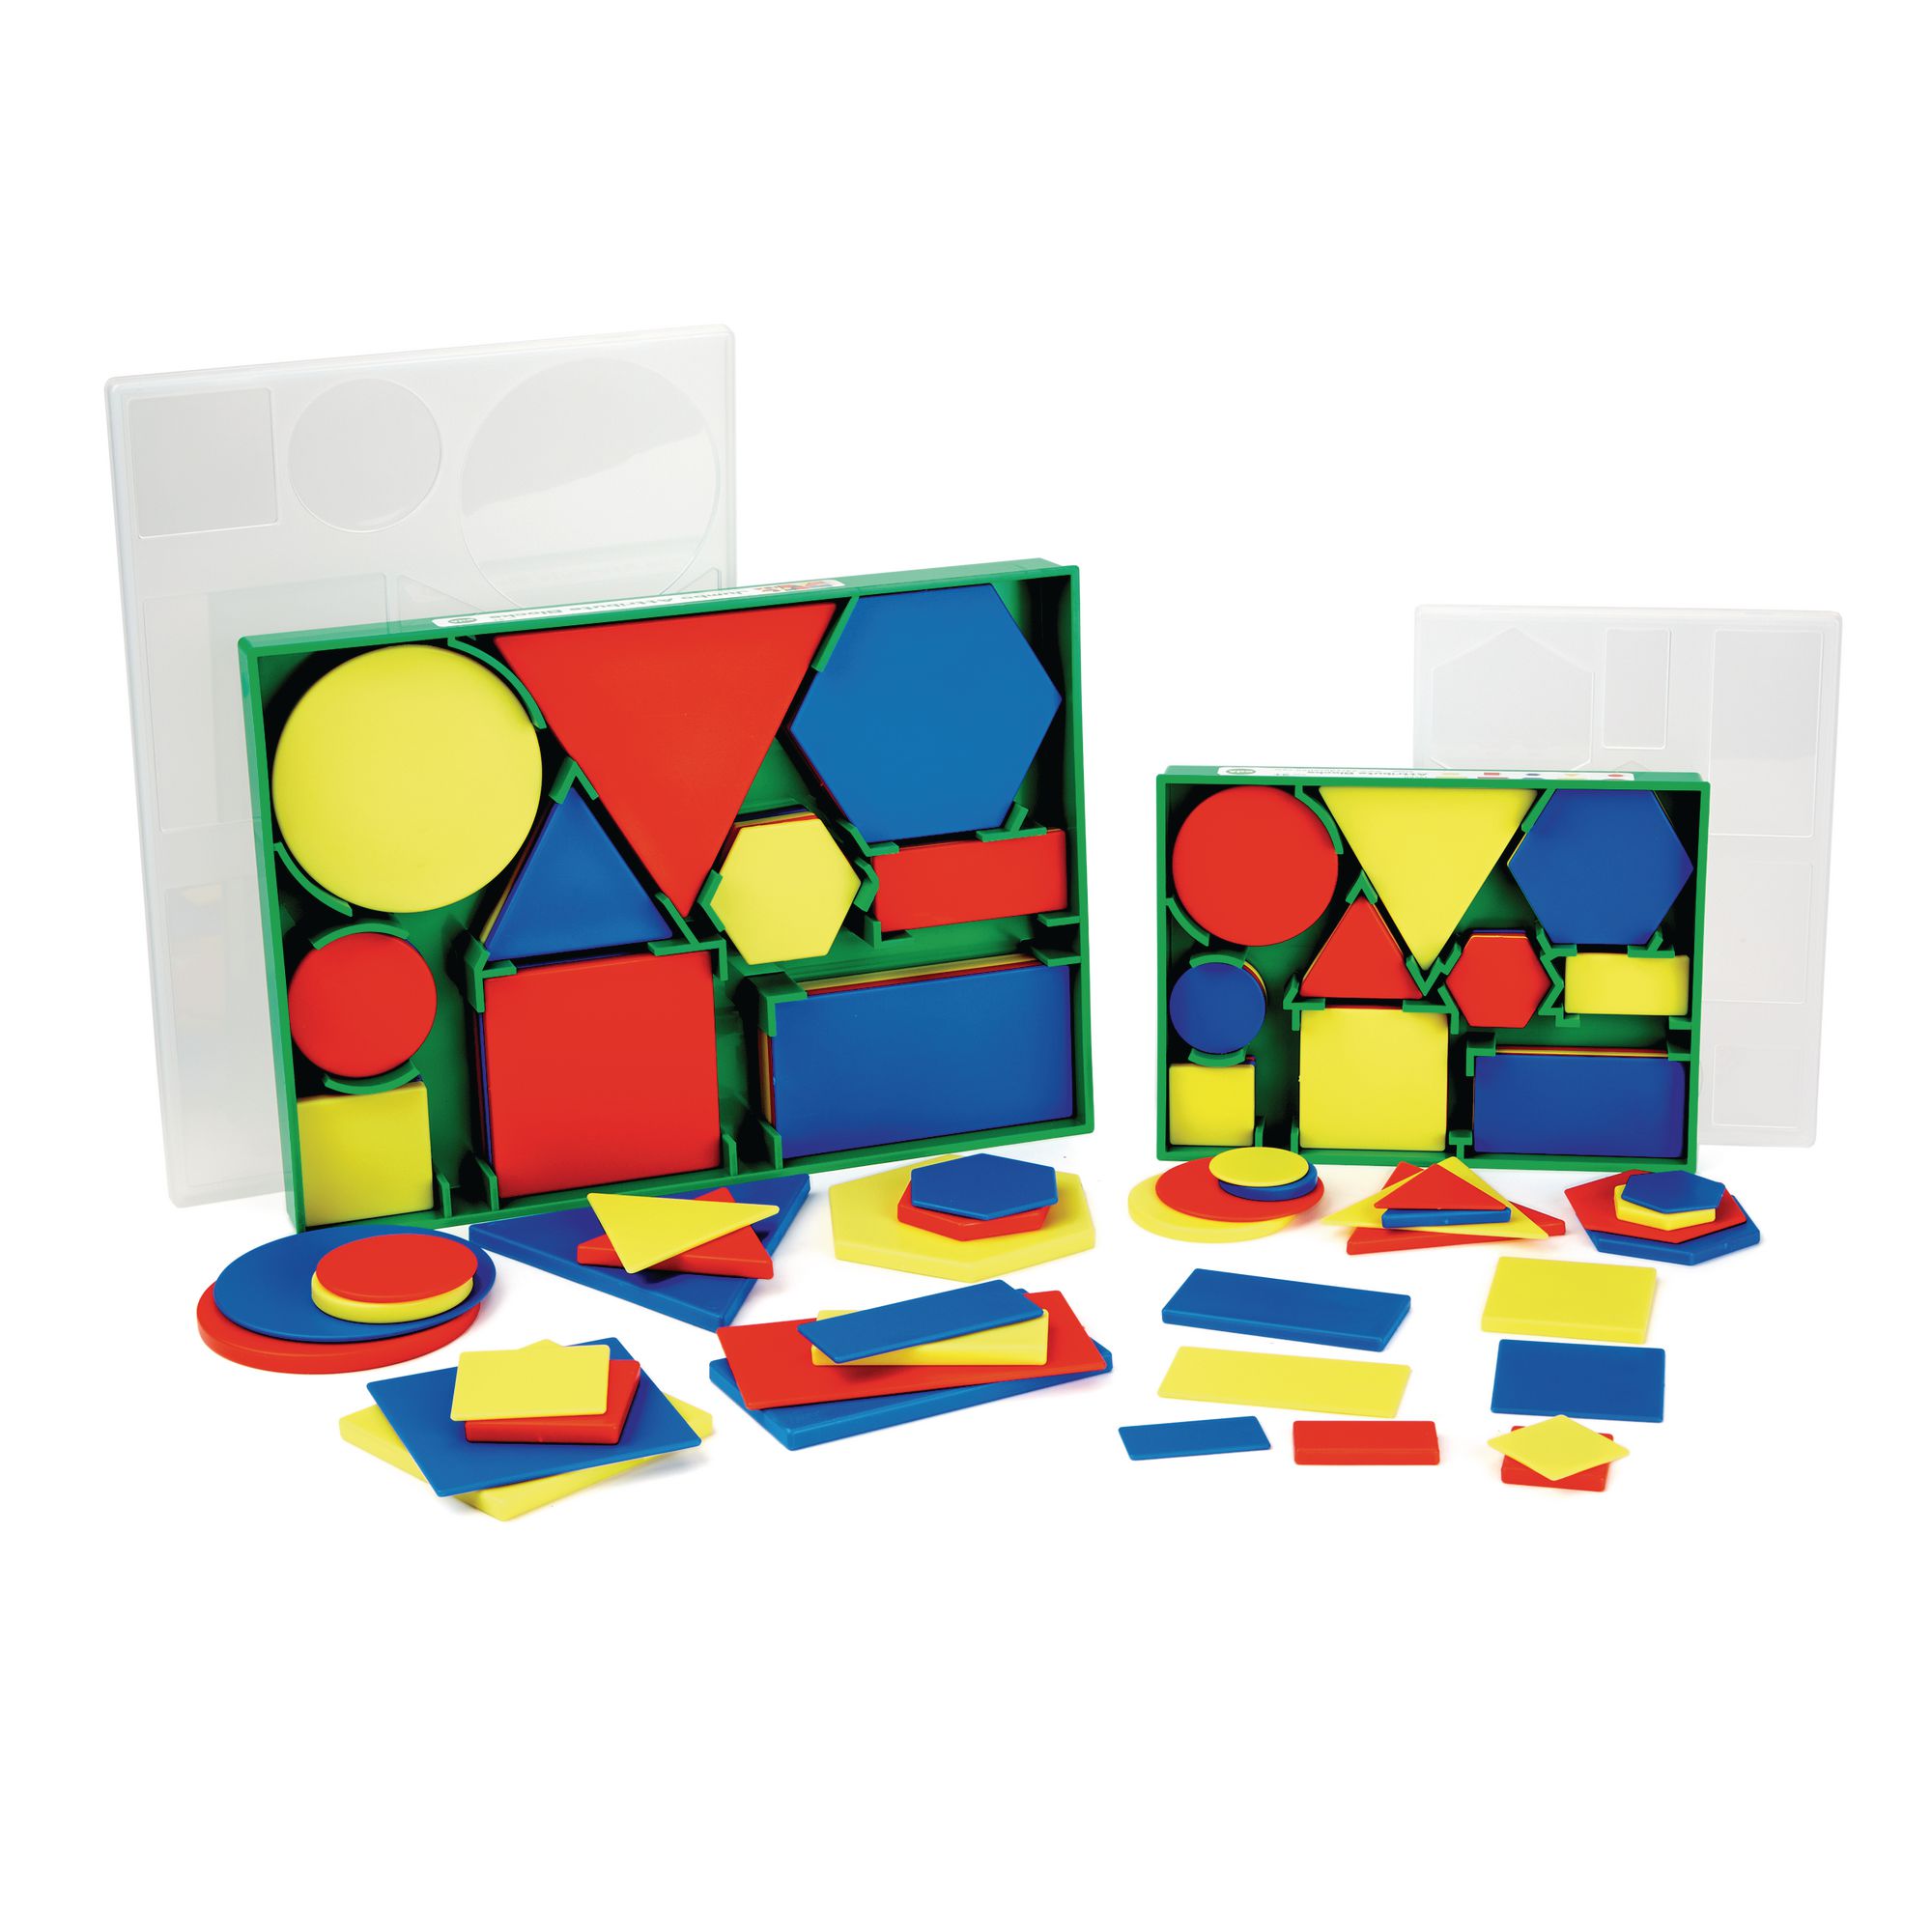 G168551 - edx education Geometric Plastic Shapes - Small - Pack of 60 ...